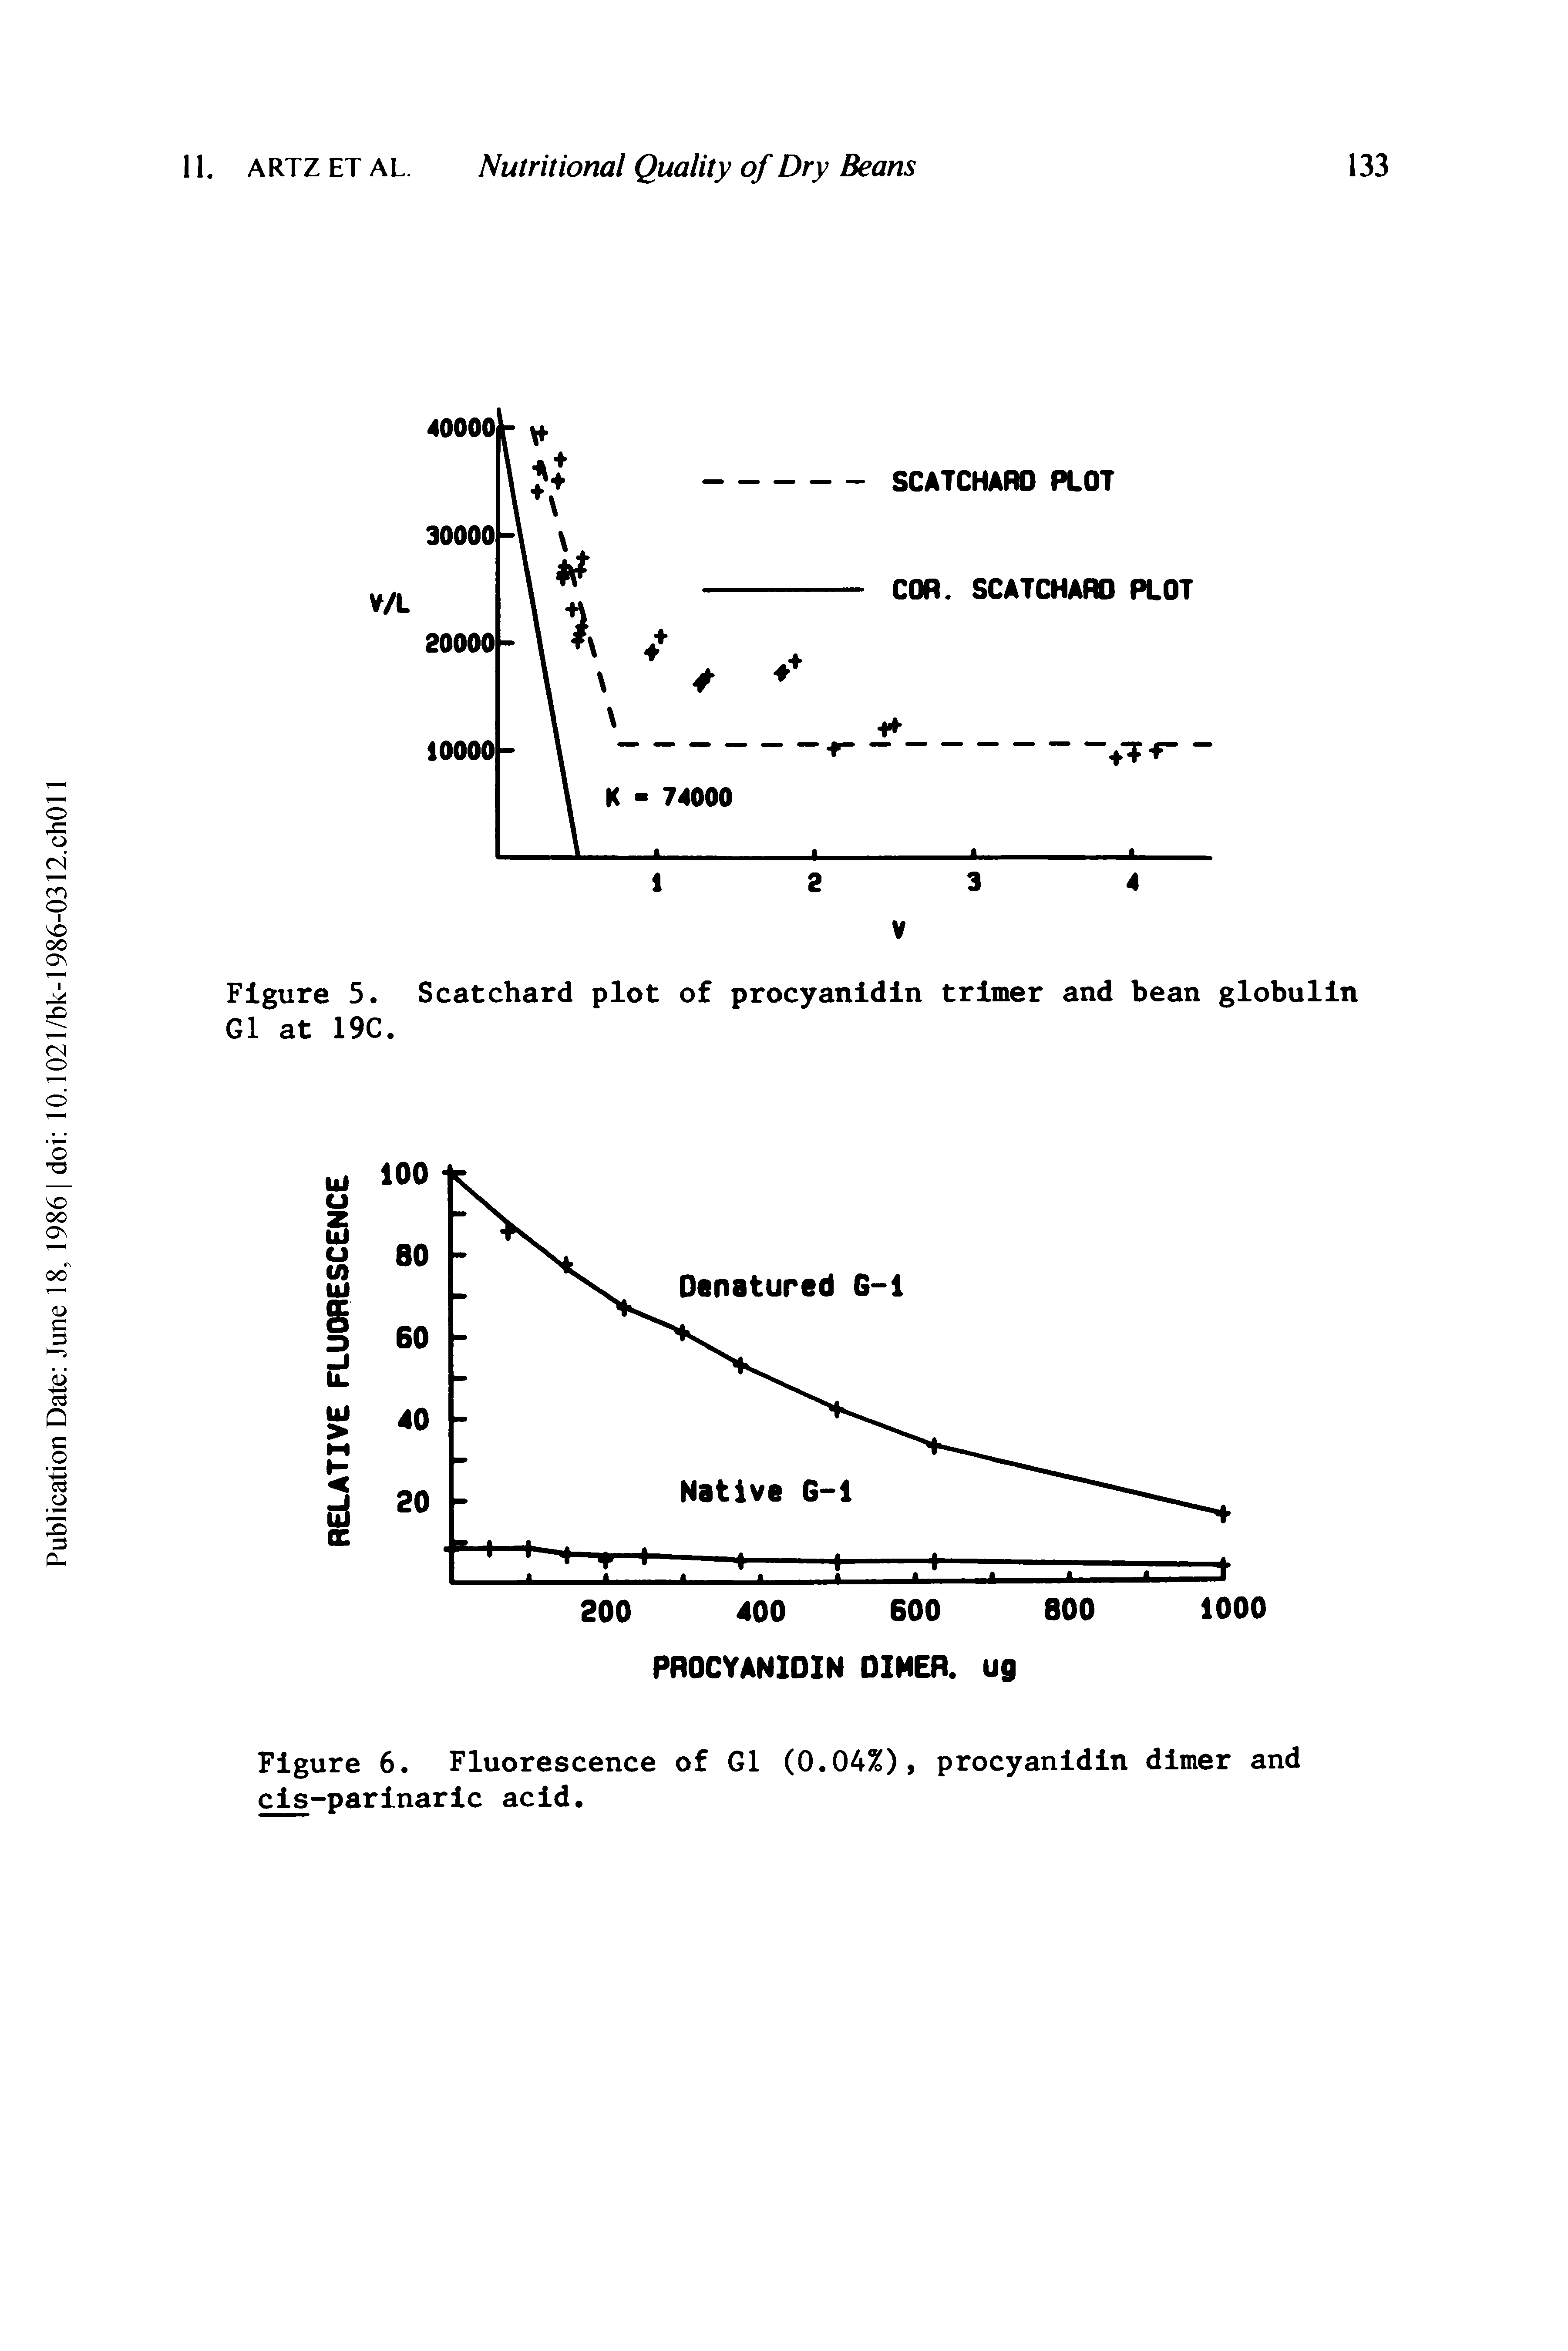 Figure 6. Fluorescence of G1 (0.04%), procyanidin dimer and cis-parinaric acid.